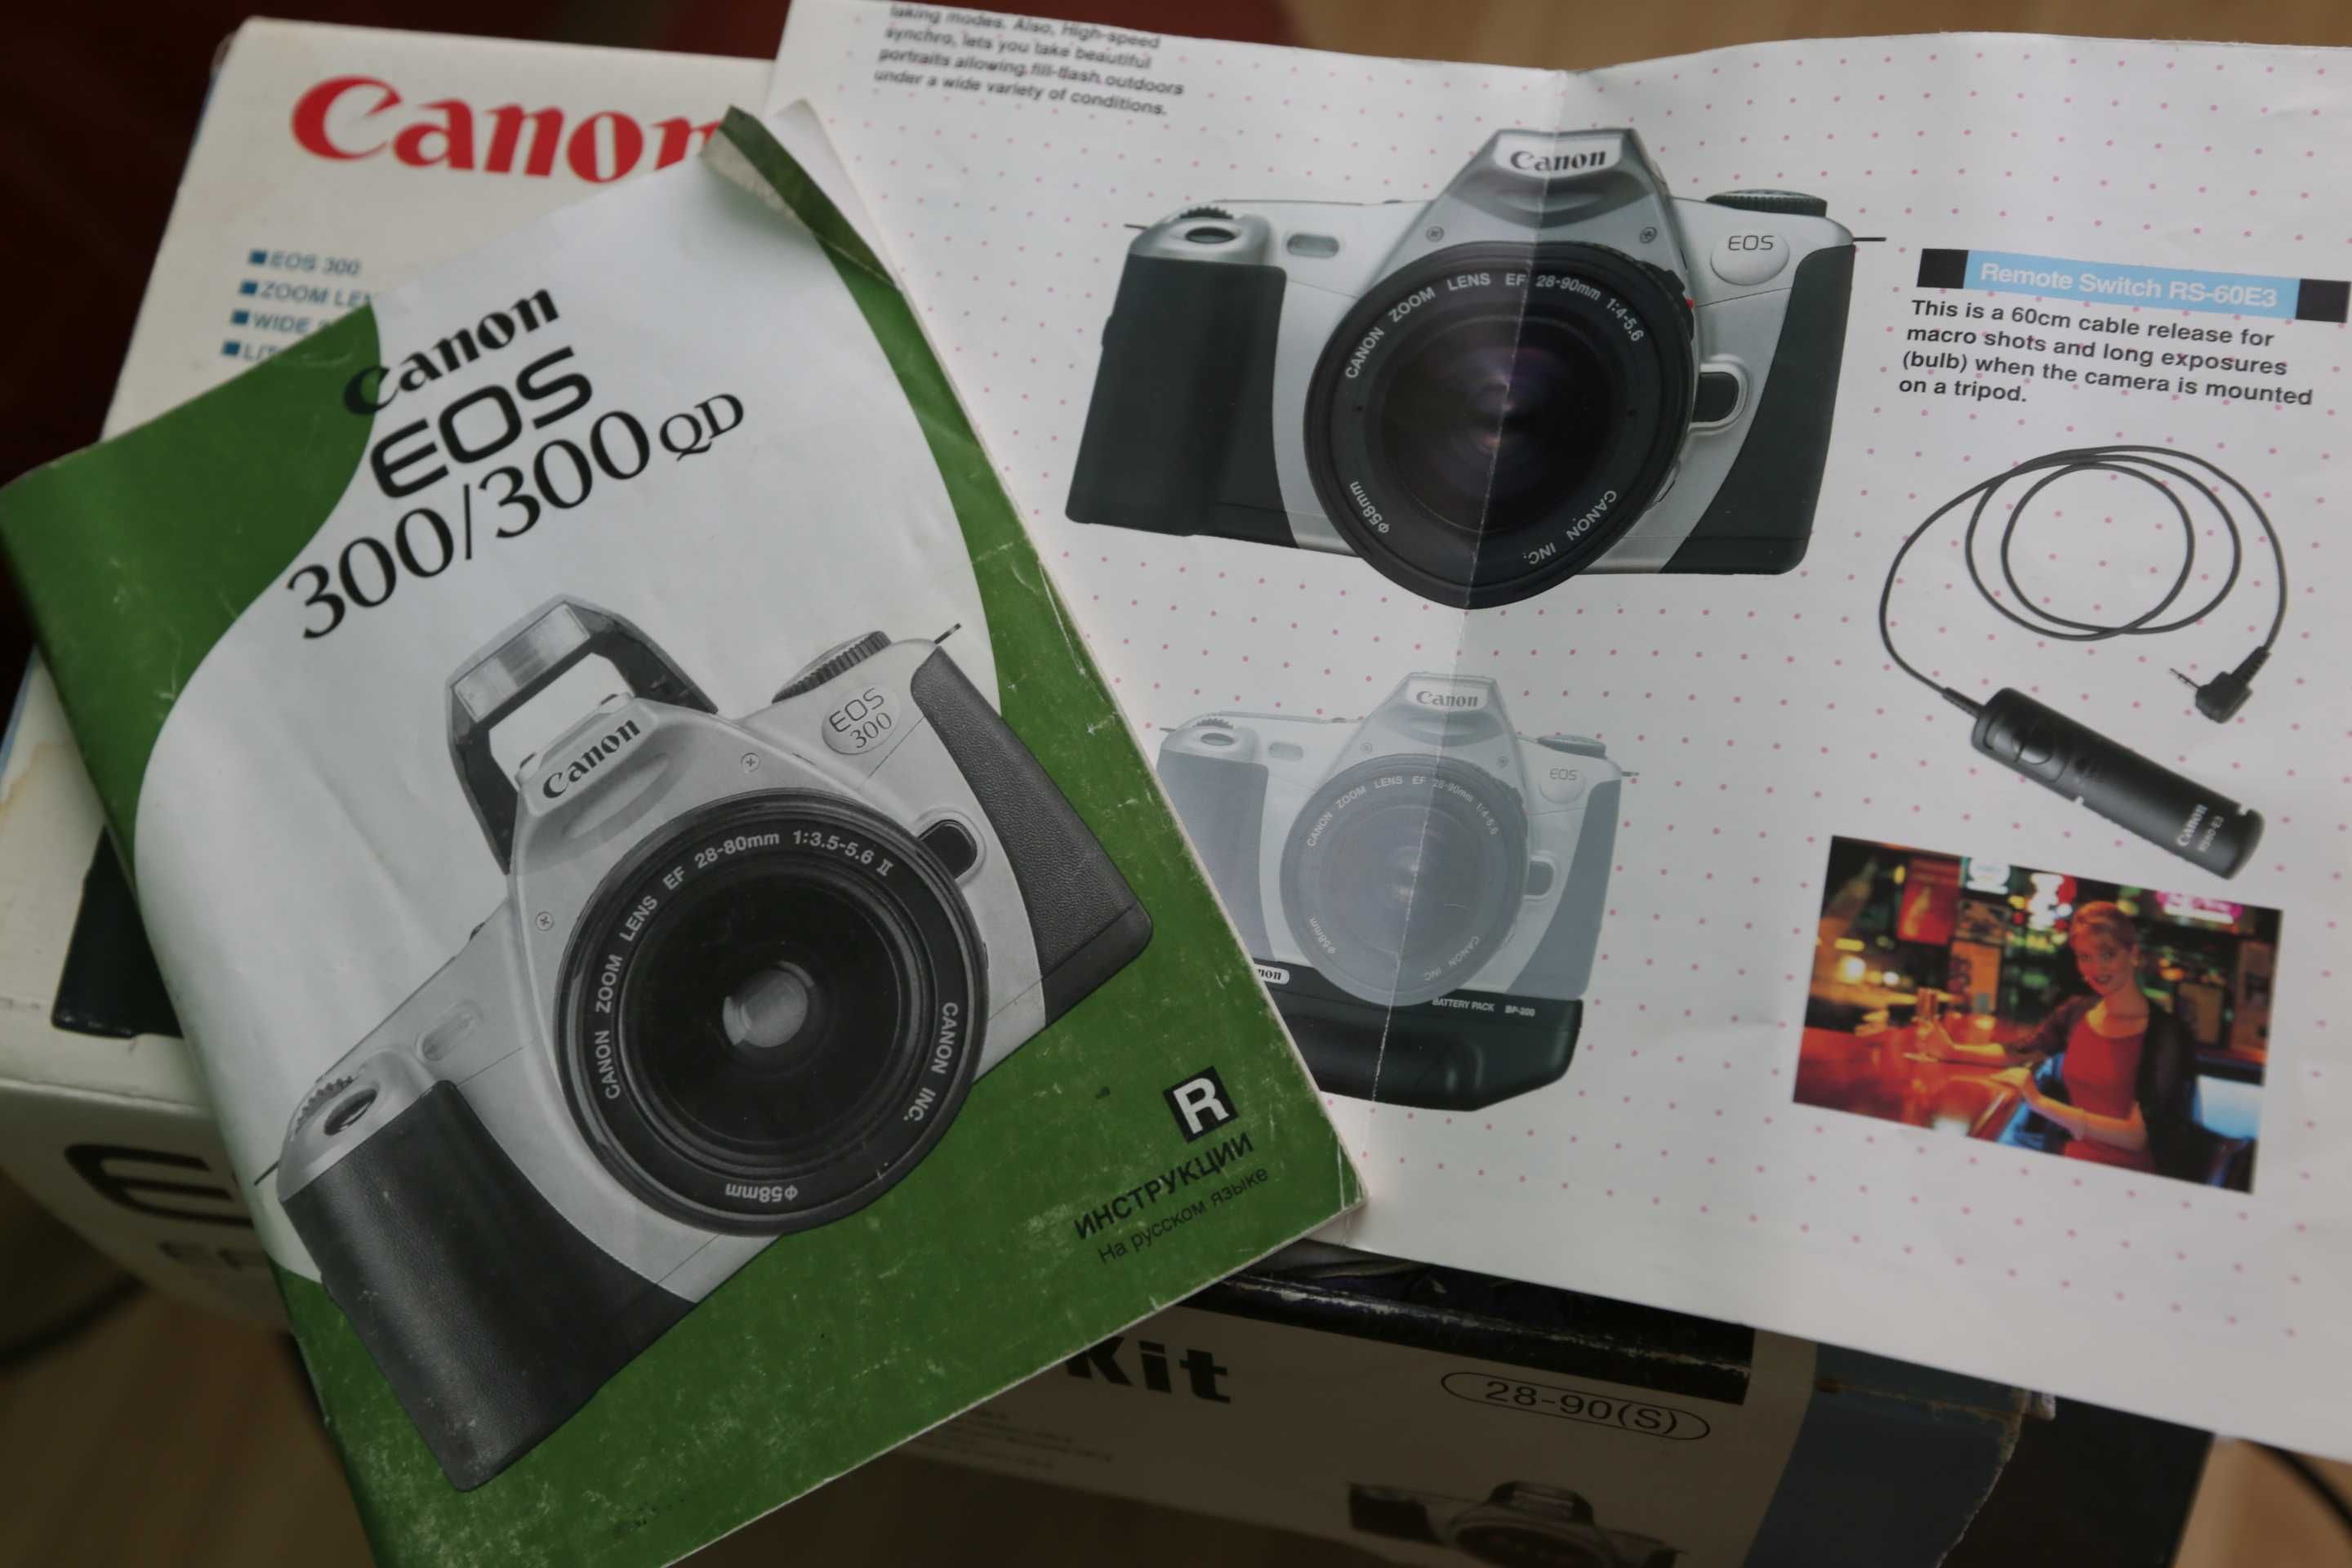 Canon EOS 300 kit 28-90 mm f/4-5,6 + Оригінальний бустер